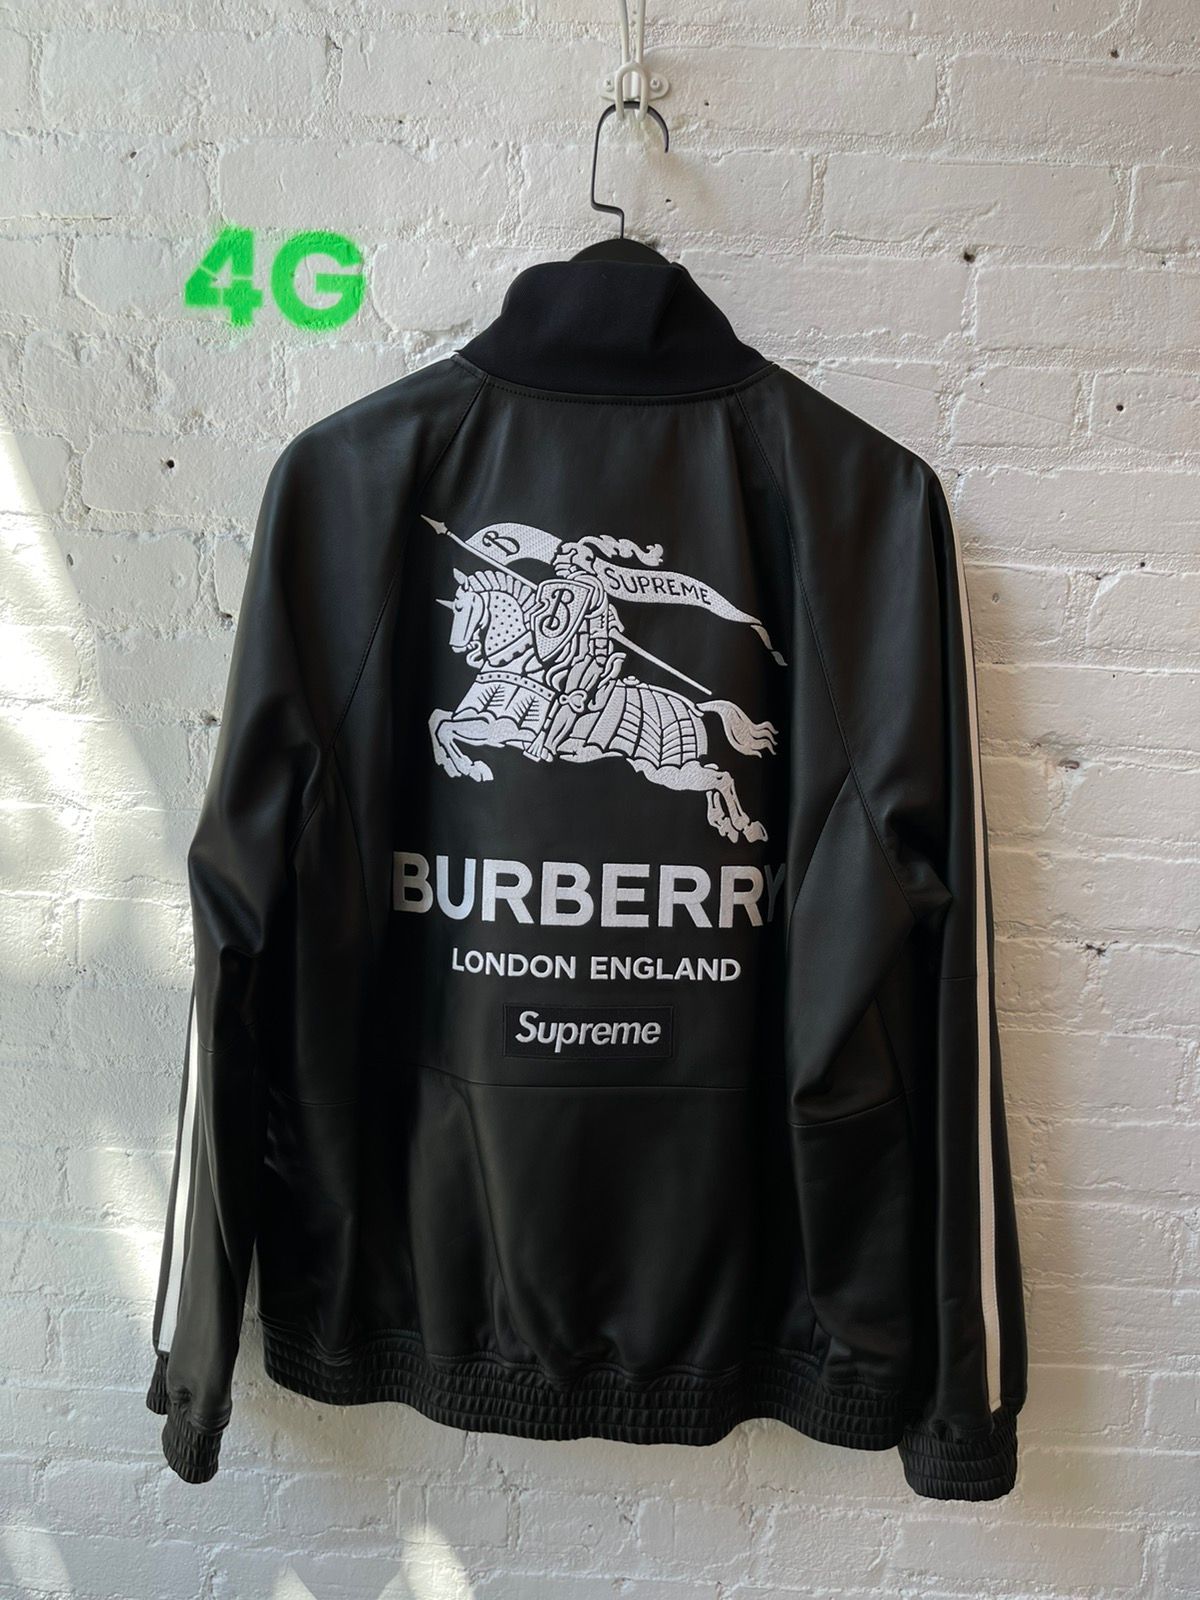 Burberry X Supreme 1 of 30 BLACK LEATHER JACKET XL